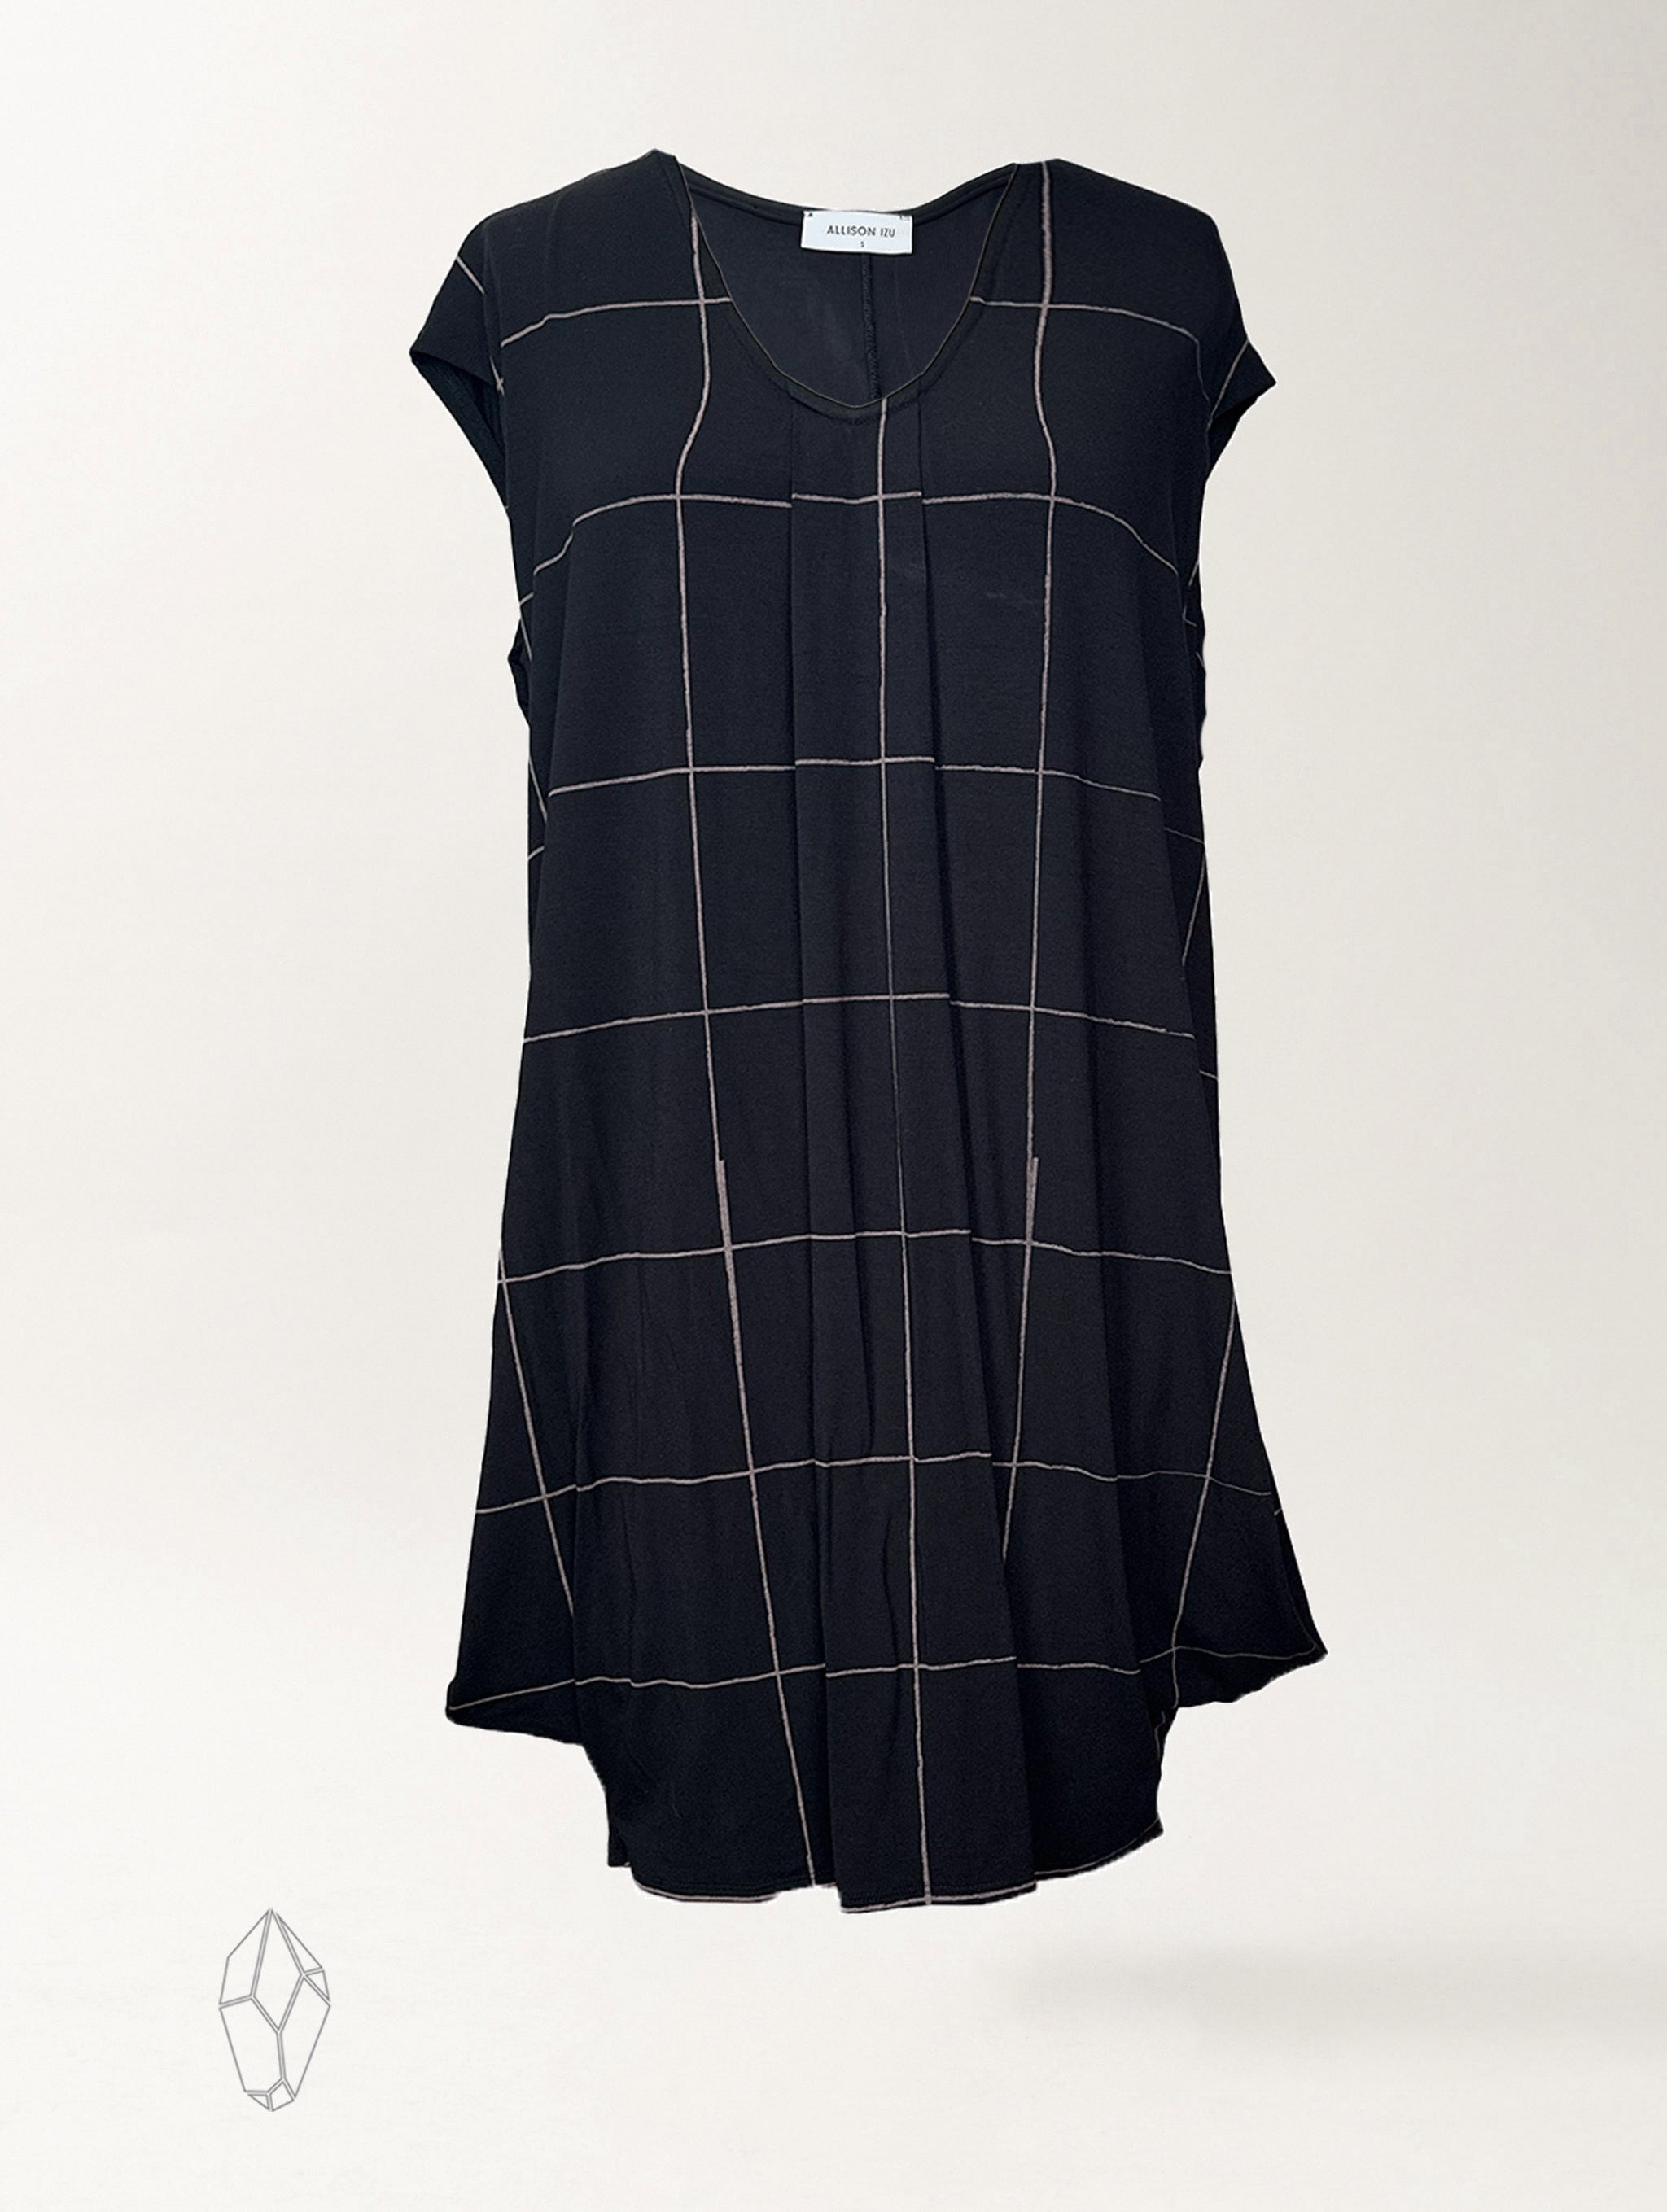 Natasha Dress - Infinite Grid Rayon Jersey